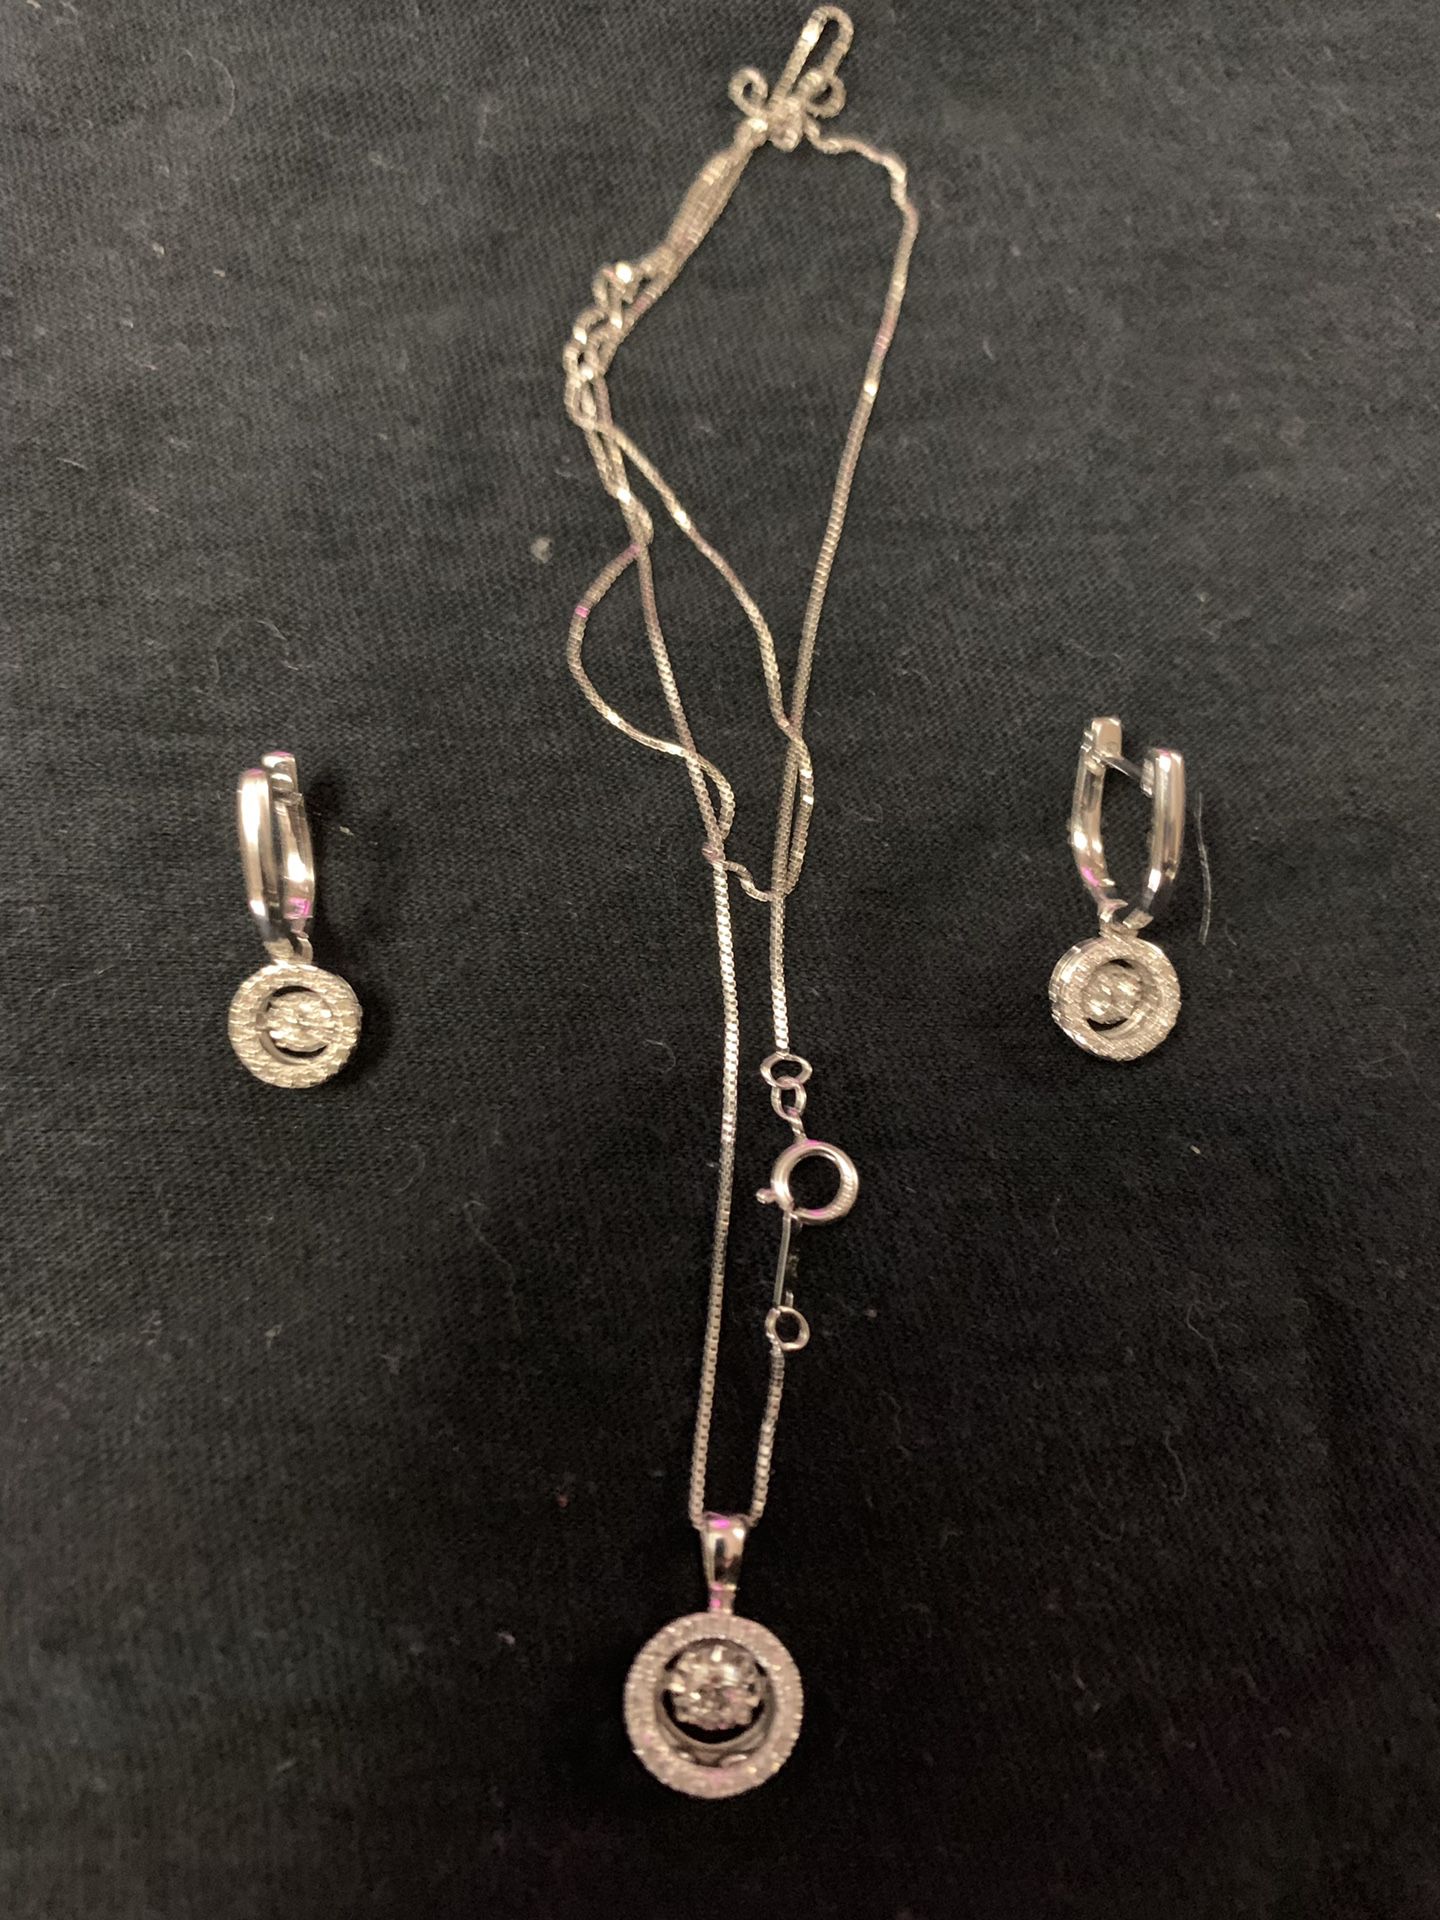 10k chain with diamond pendant and diamond earring set